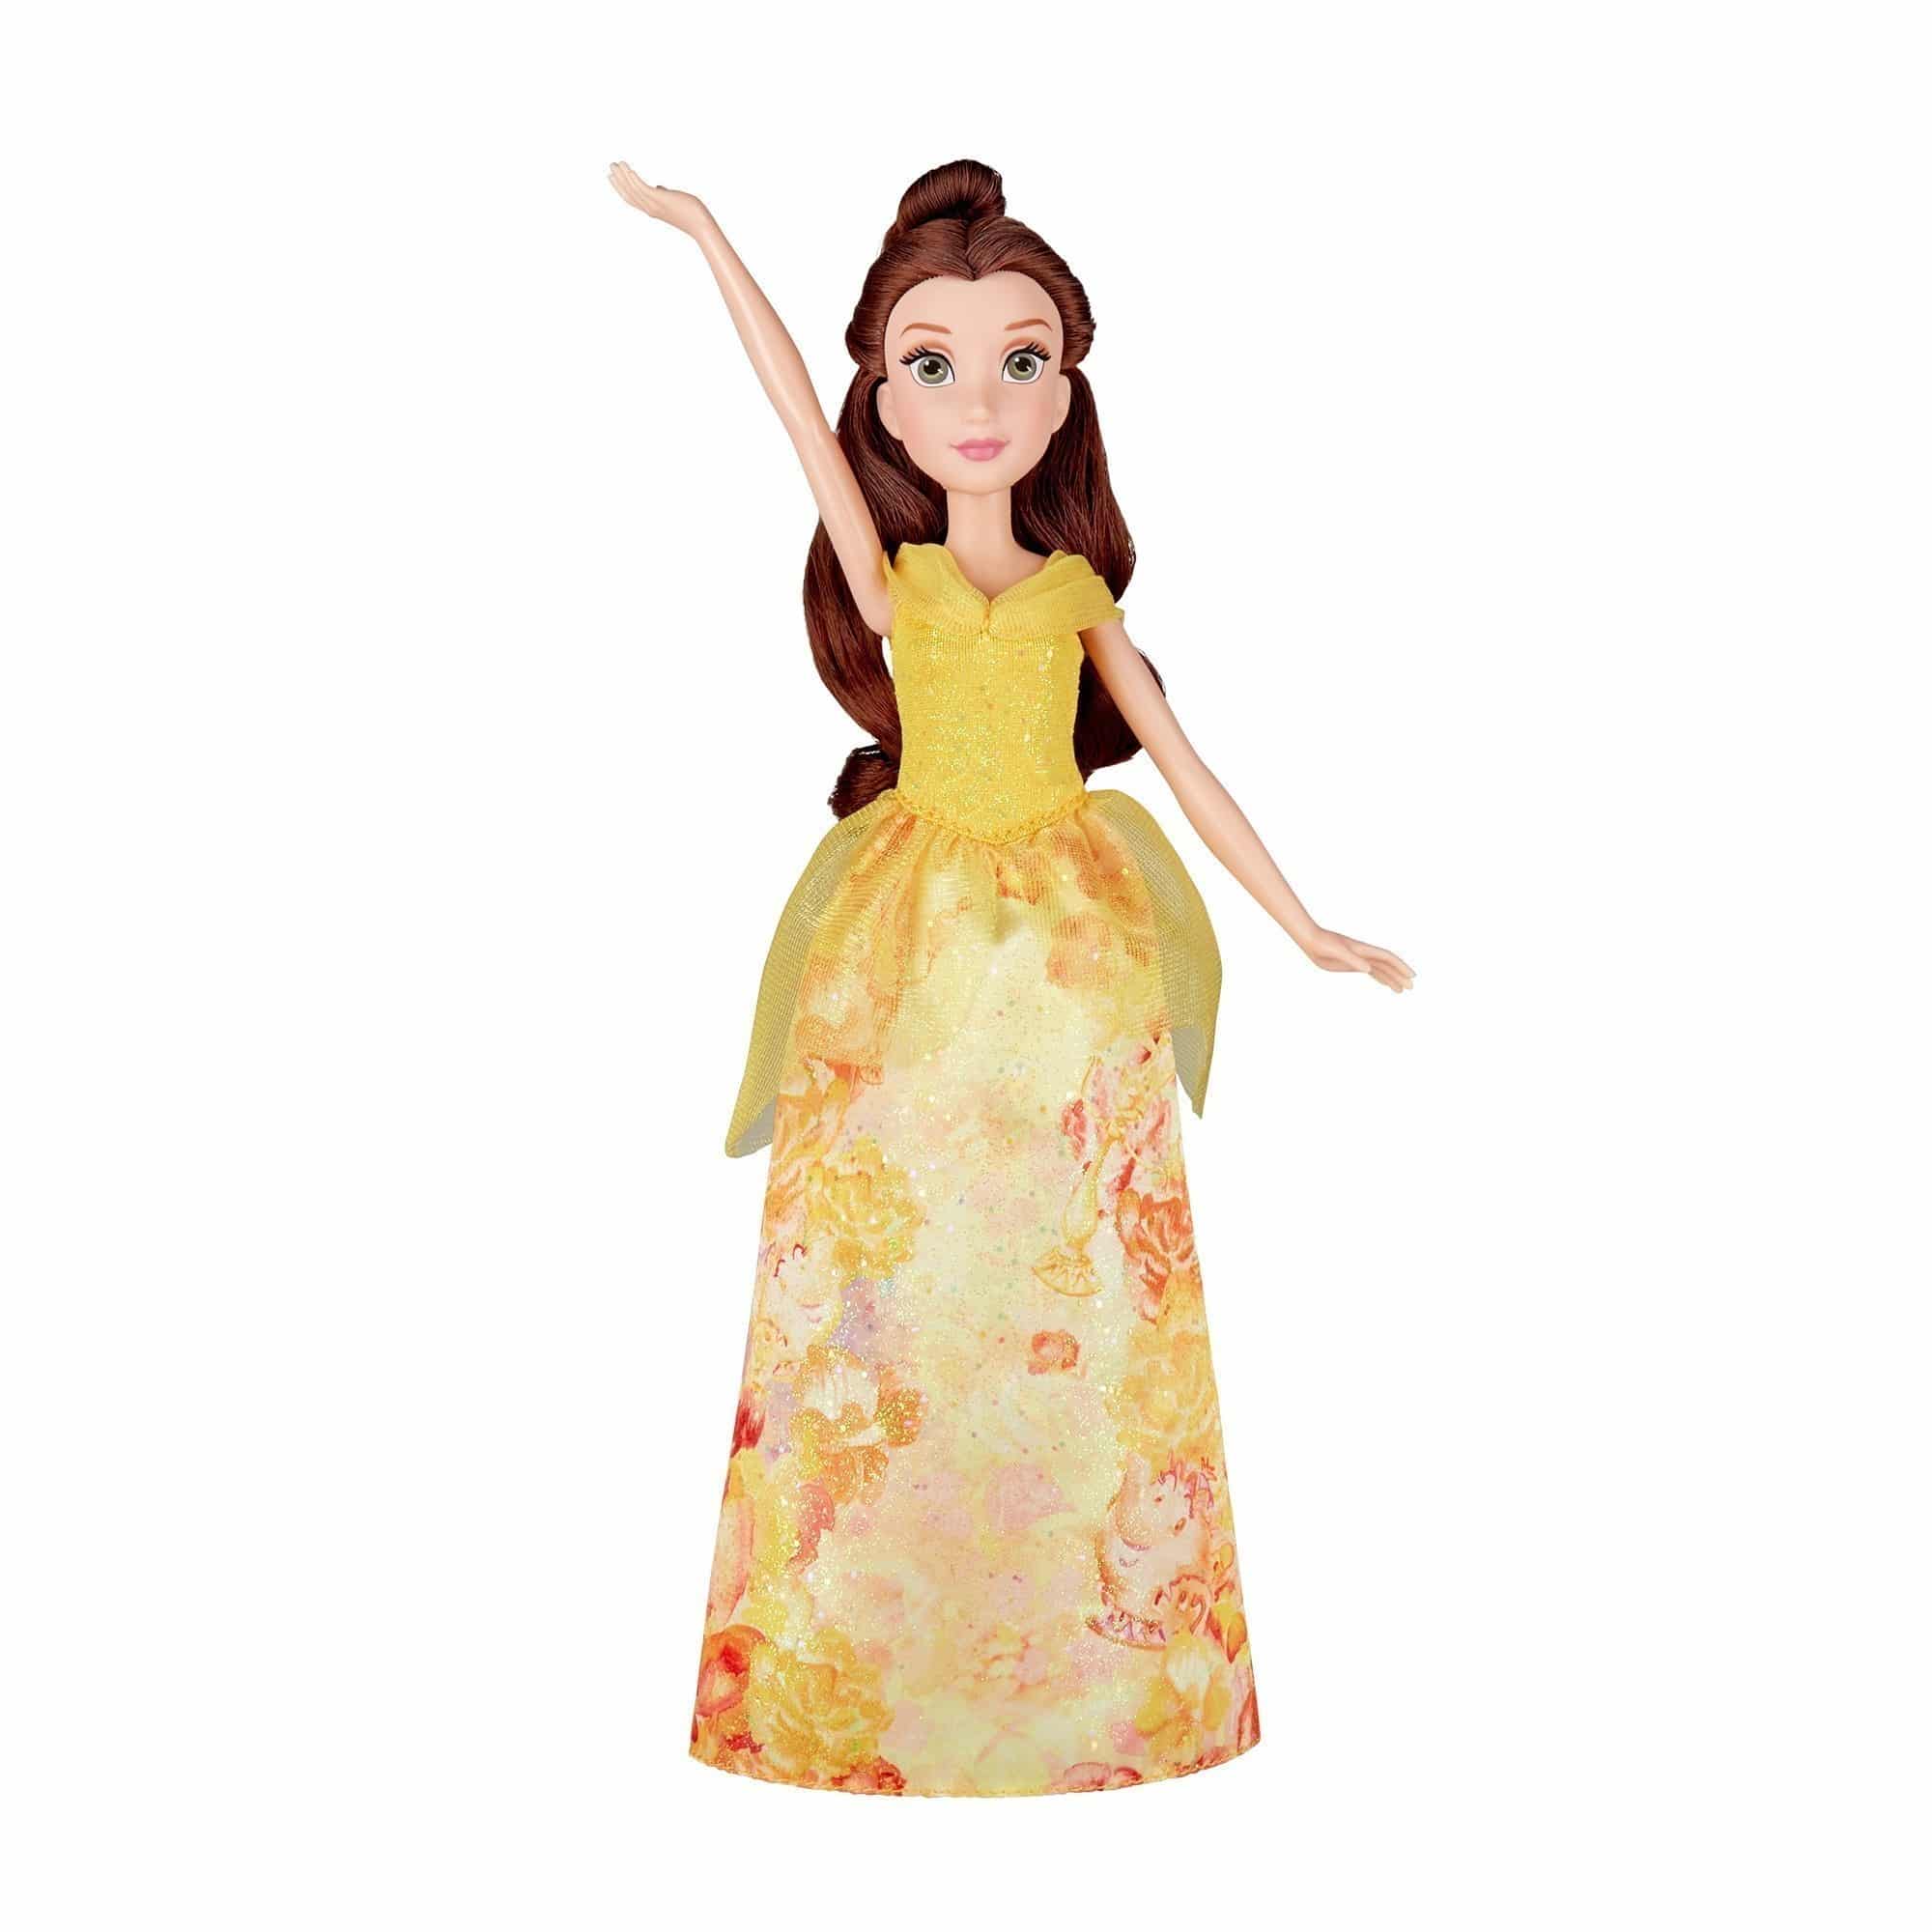 Disney Princess - Royal Shimmer Belle Doll